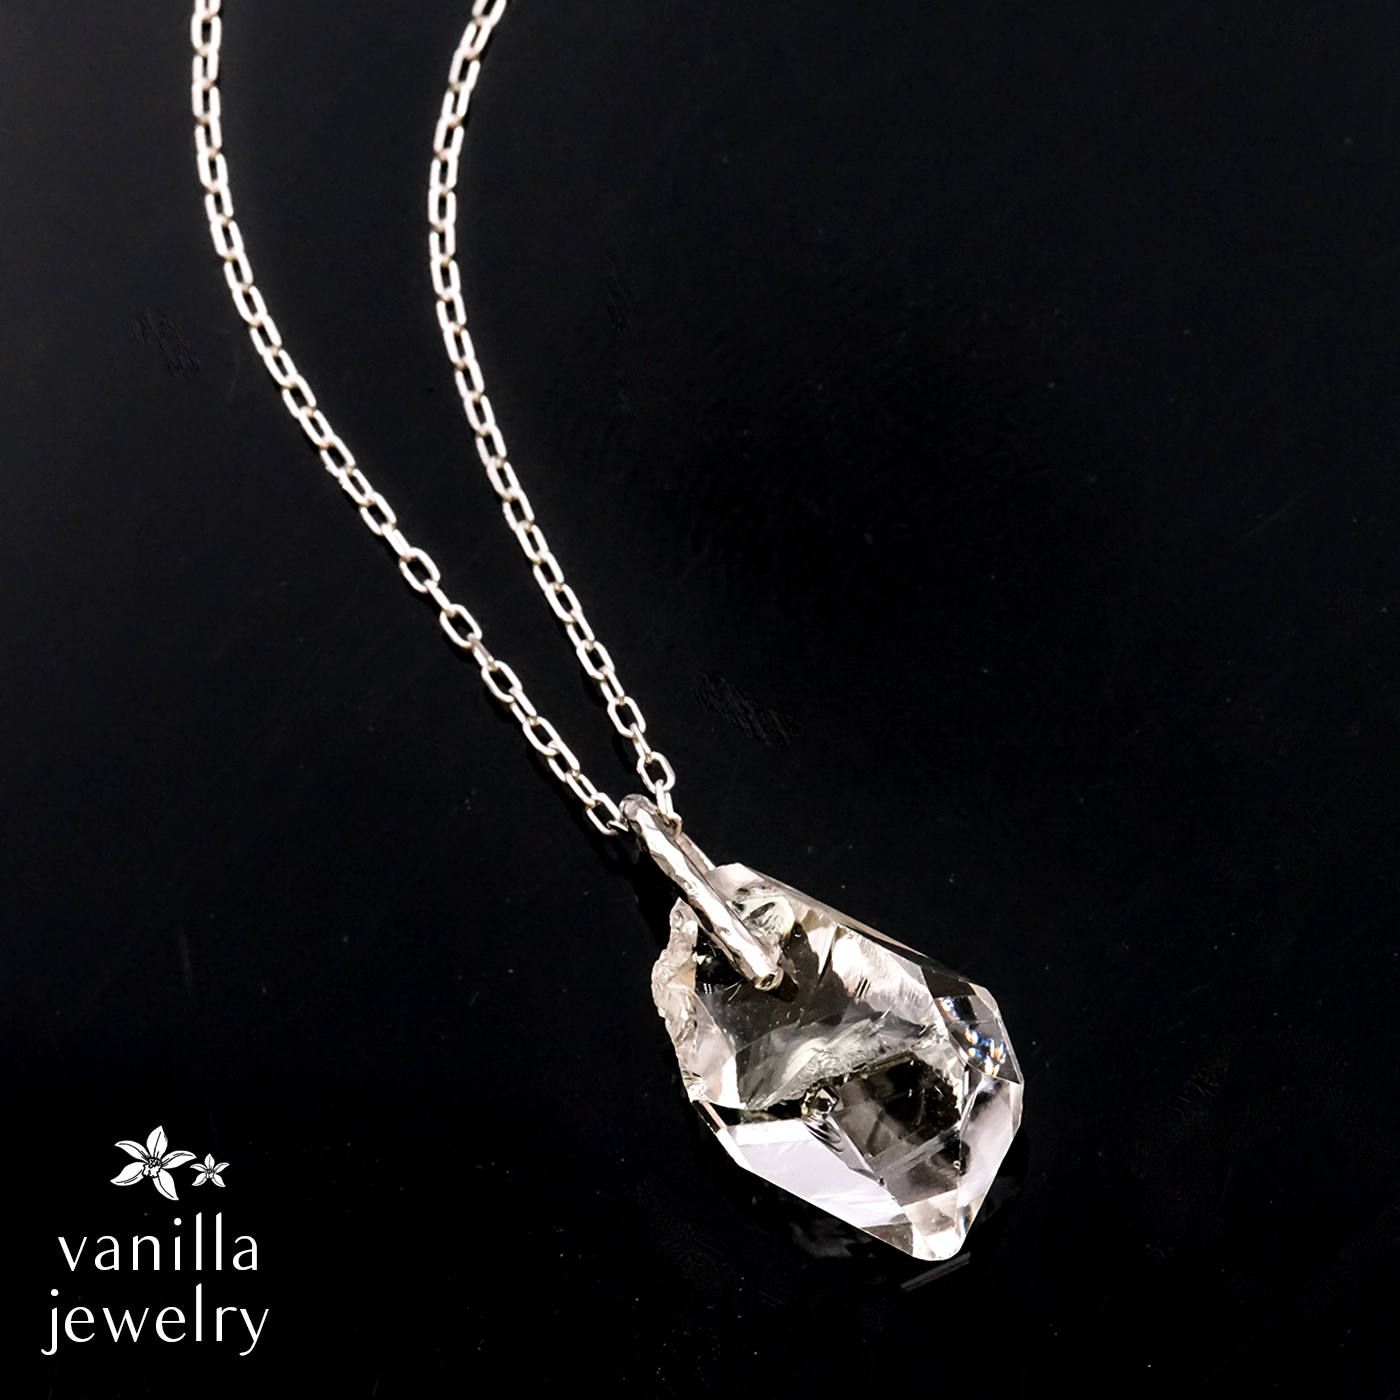 vanilla jewelry - Aries(アリエス) ハーキマーダイヤモンド K18WG